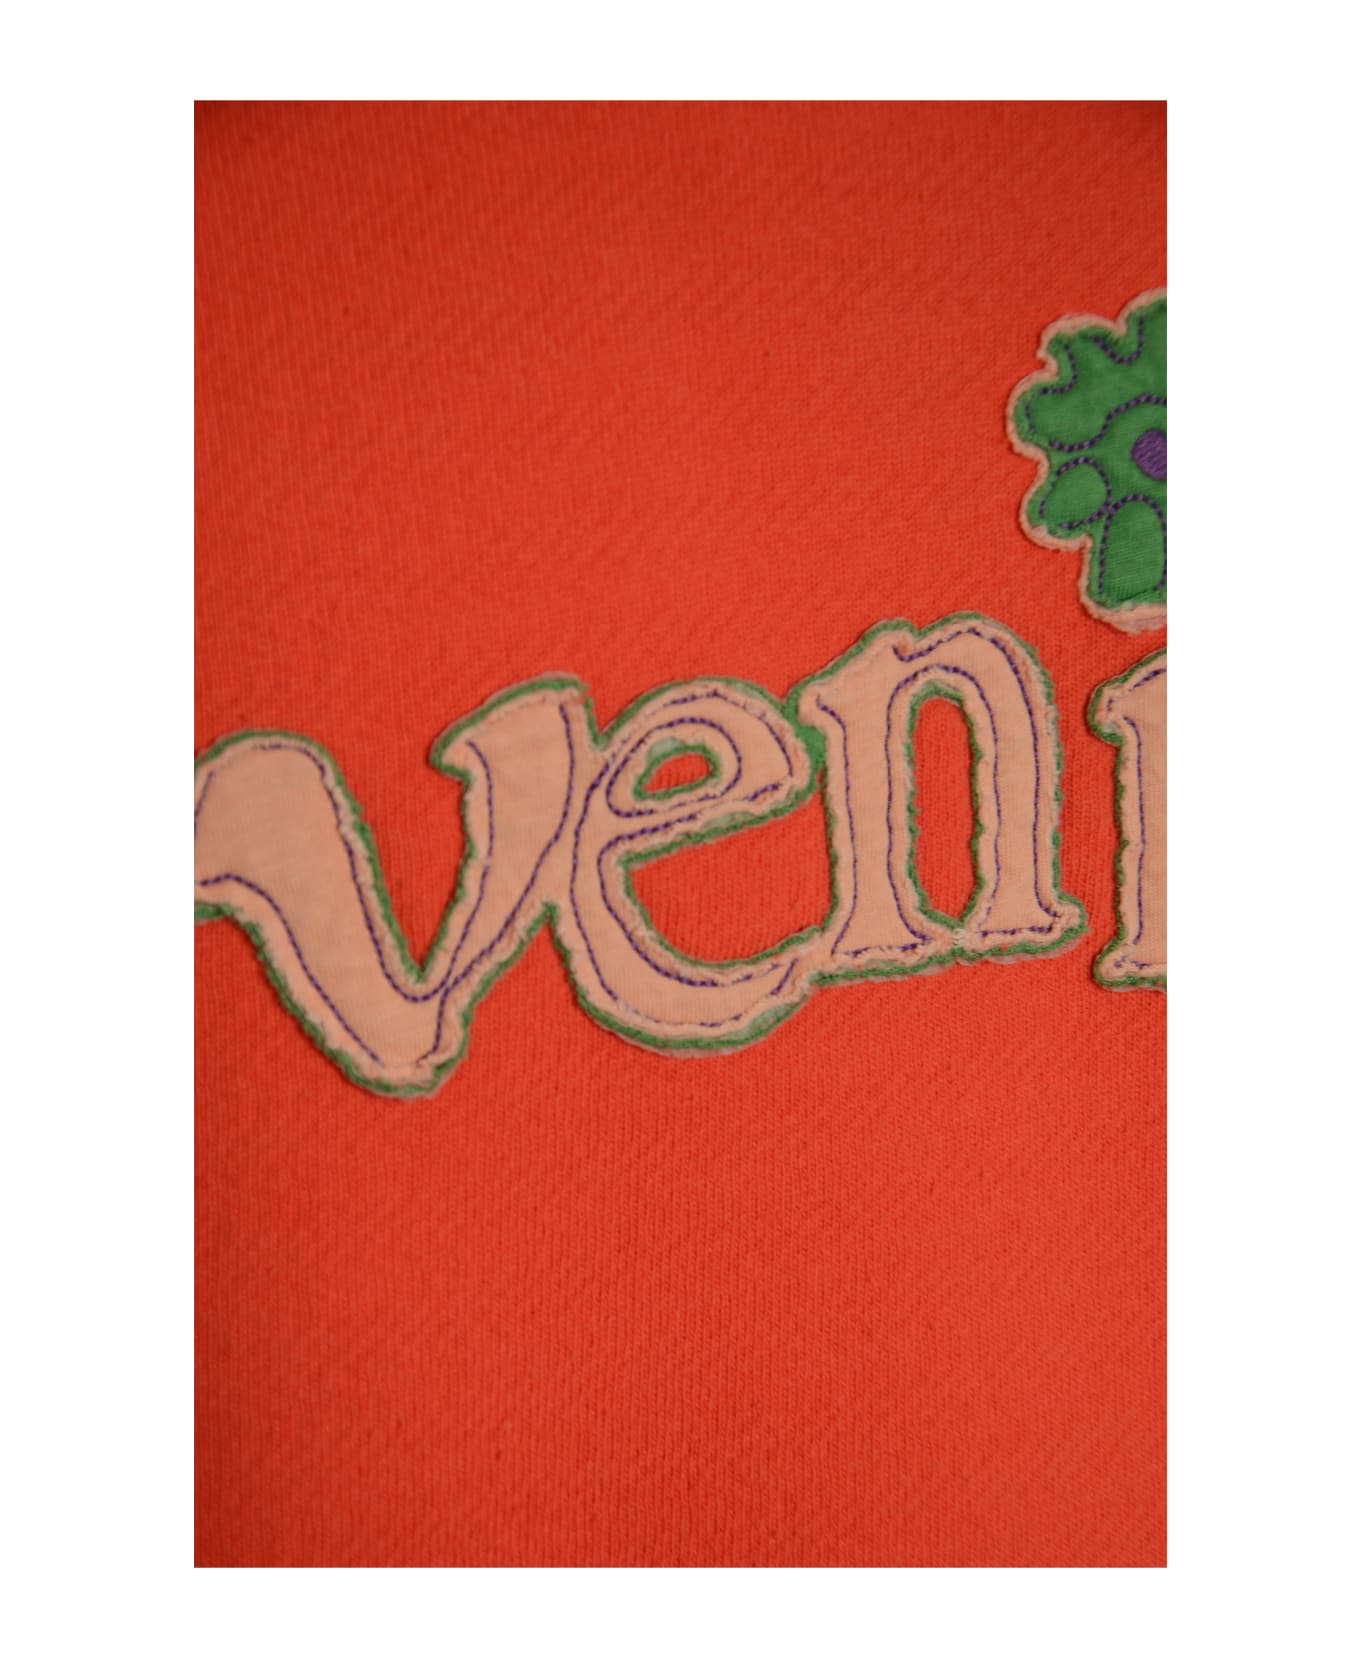 ERL Venice Logo Ribbed Sweatshirt - Red フリース